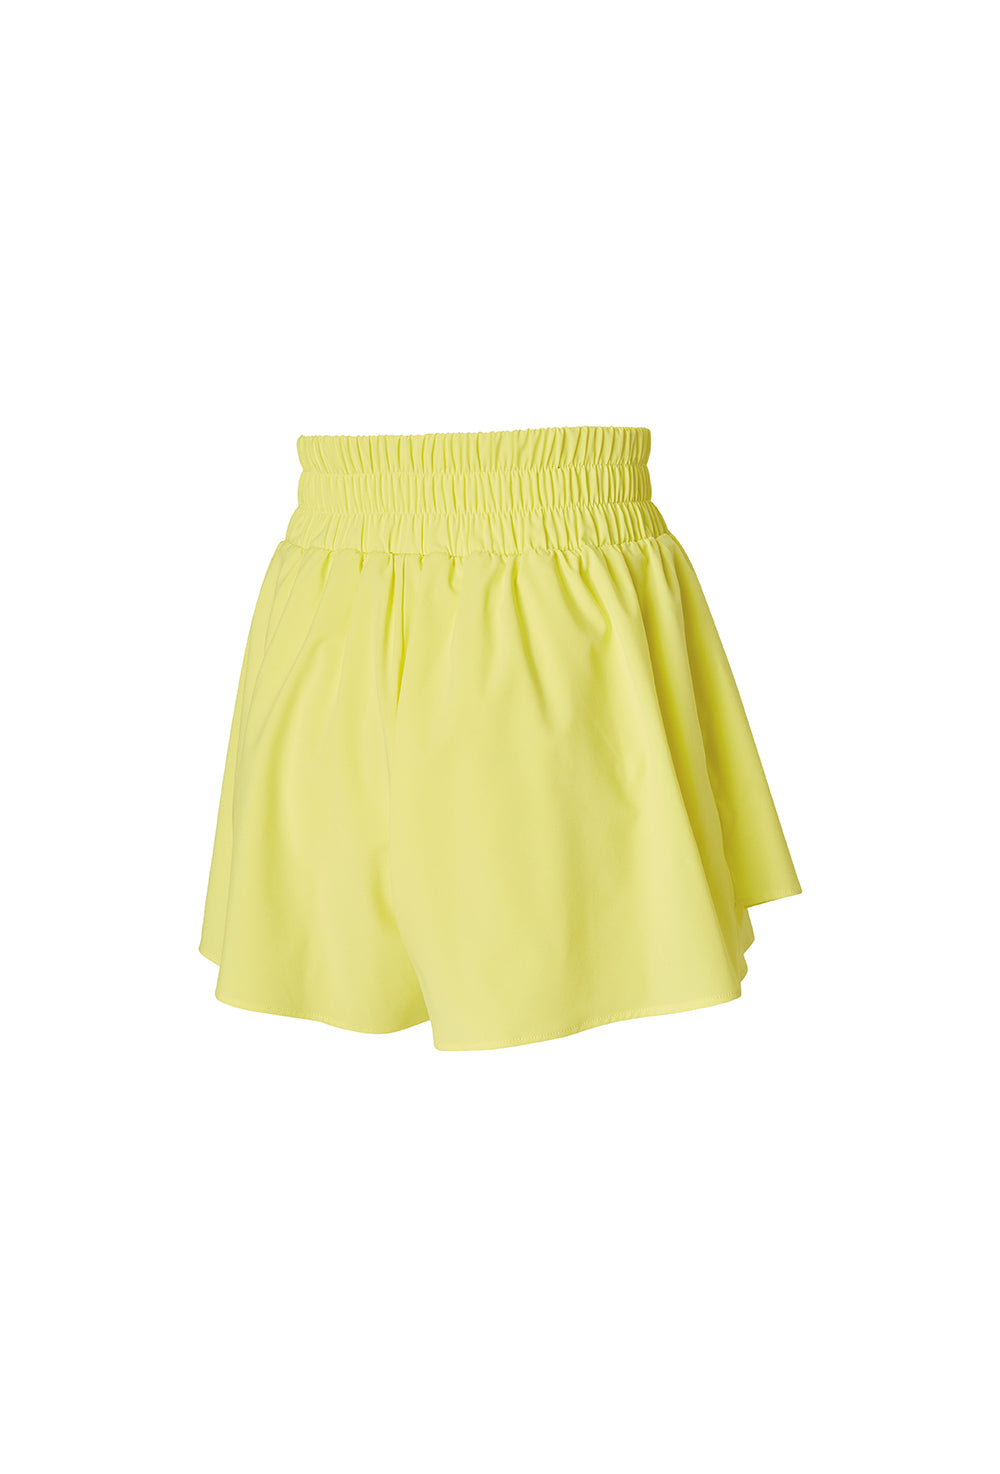 2-in-1 Layered Shorts - Lemon Drop